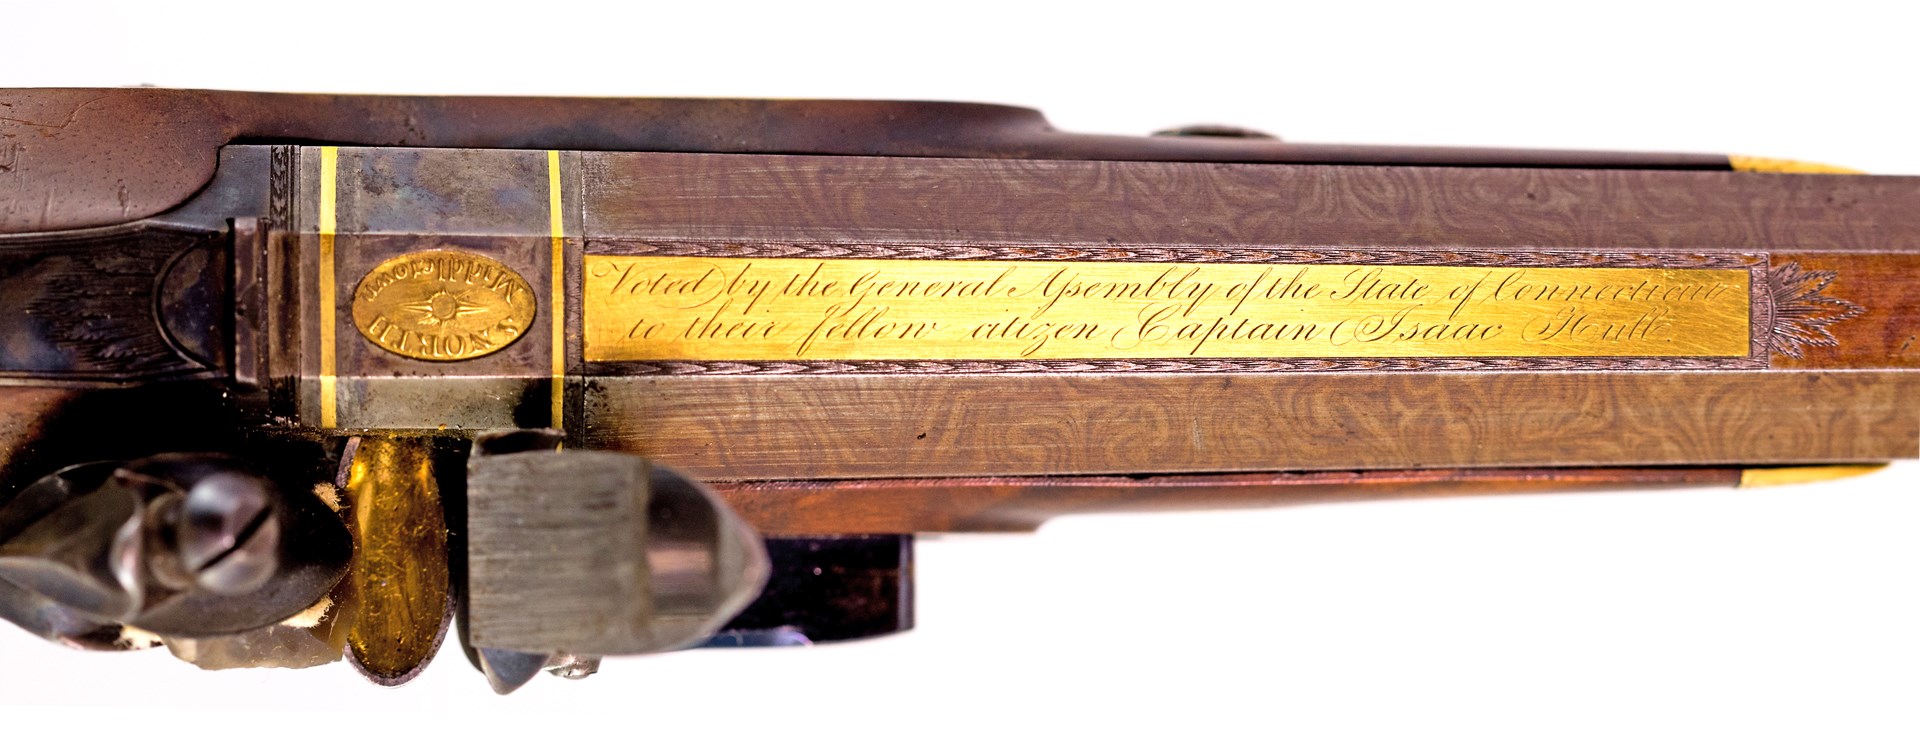 Simeon North presention pistol gold inlay engraving inscription top of barrel